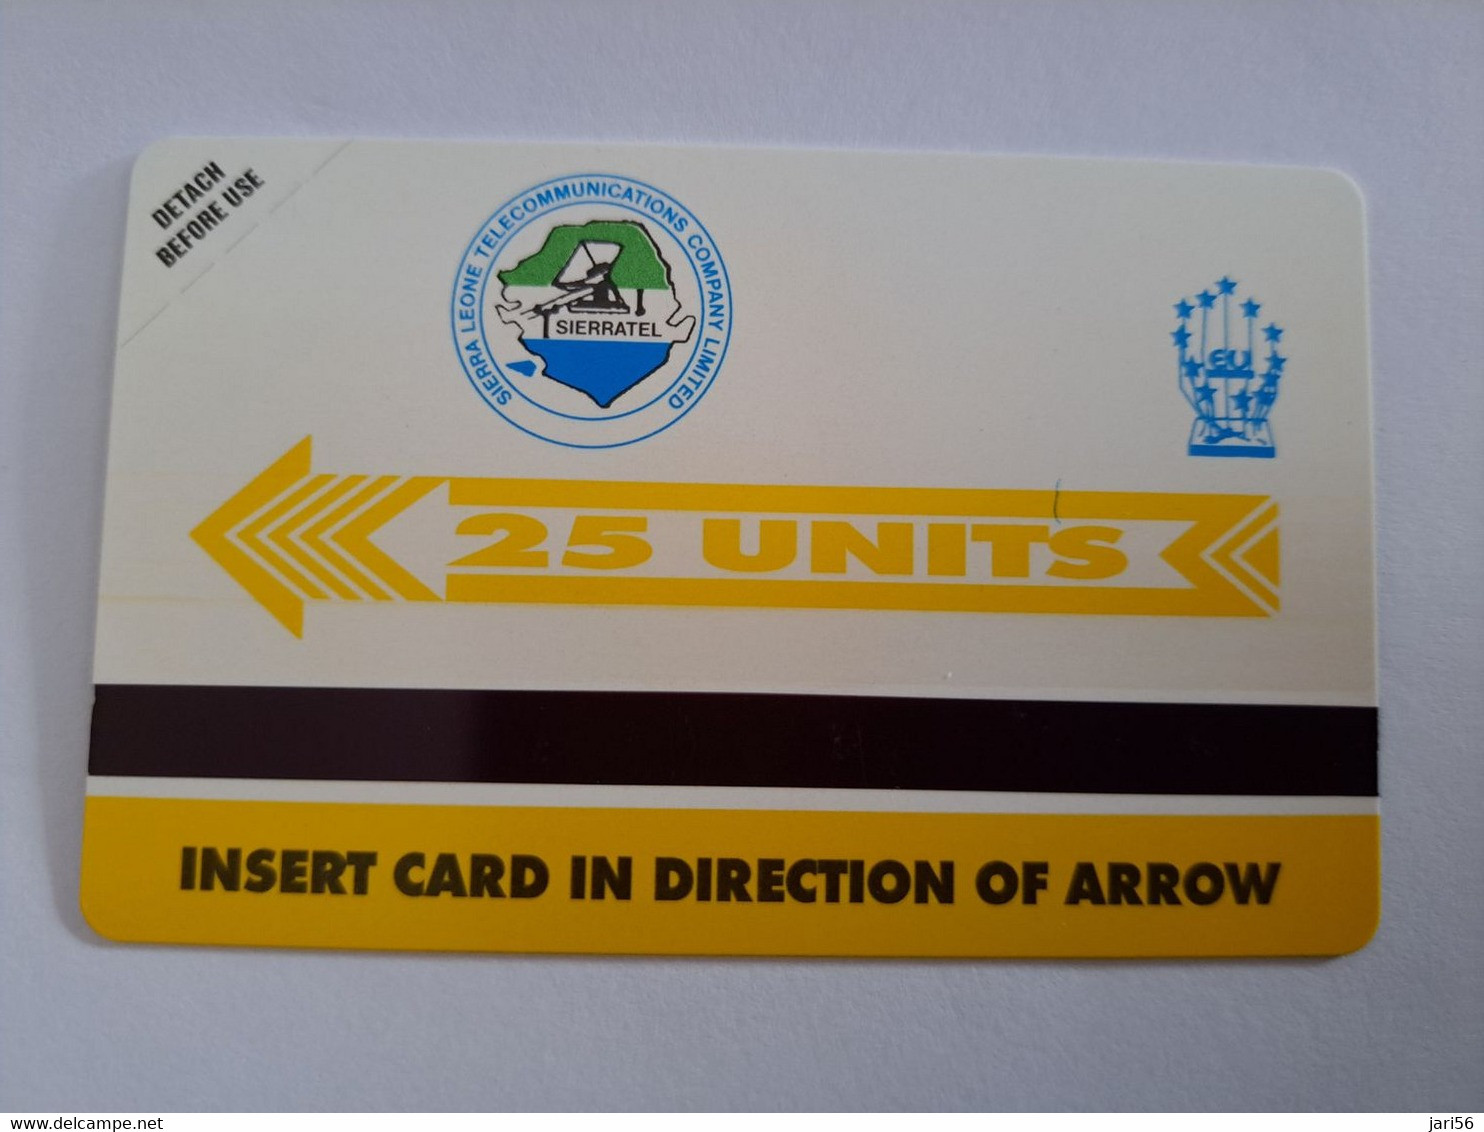 SIERRA LEONE  25 UNITS /  URMET CARD  /FLOWERS       MINT  Card     ** 10599** - Sierra Leona